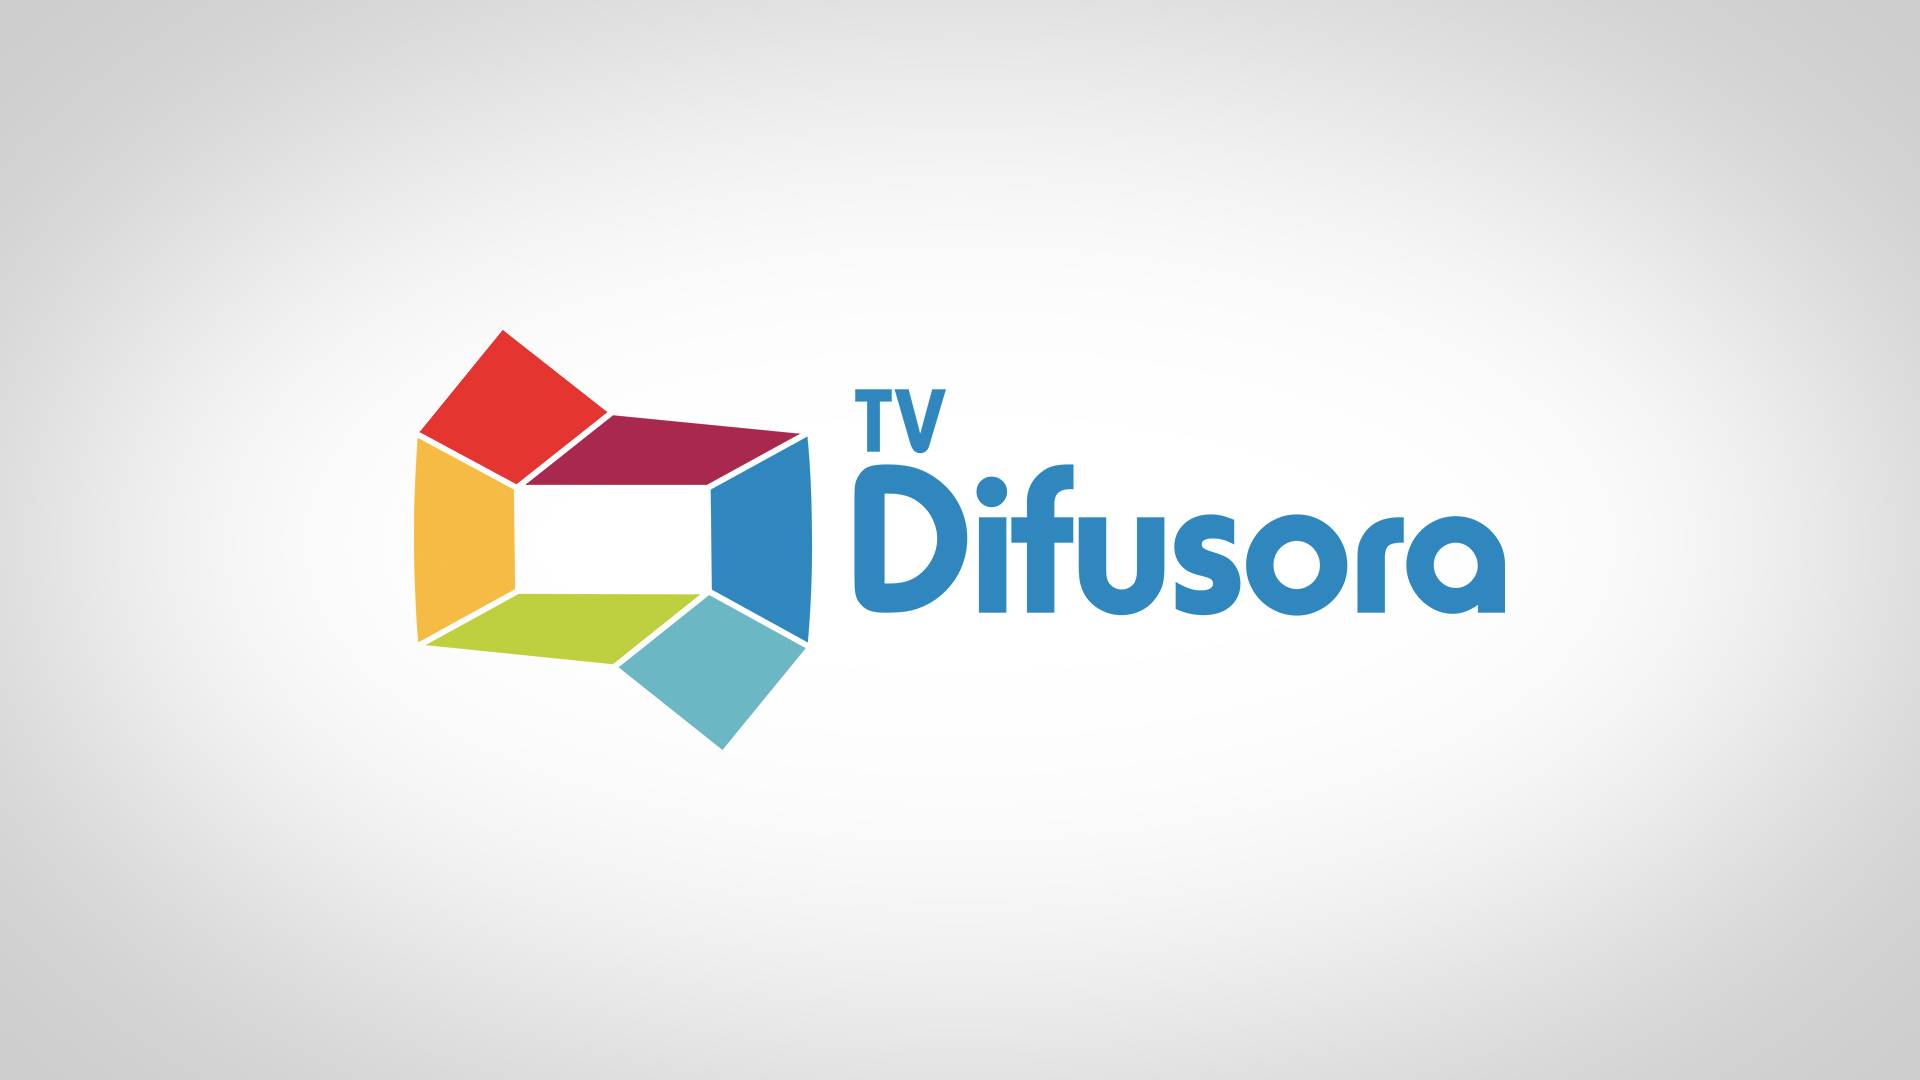 ‌Tv Difusora